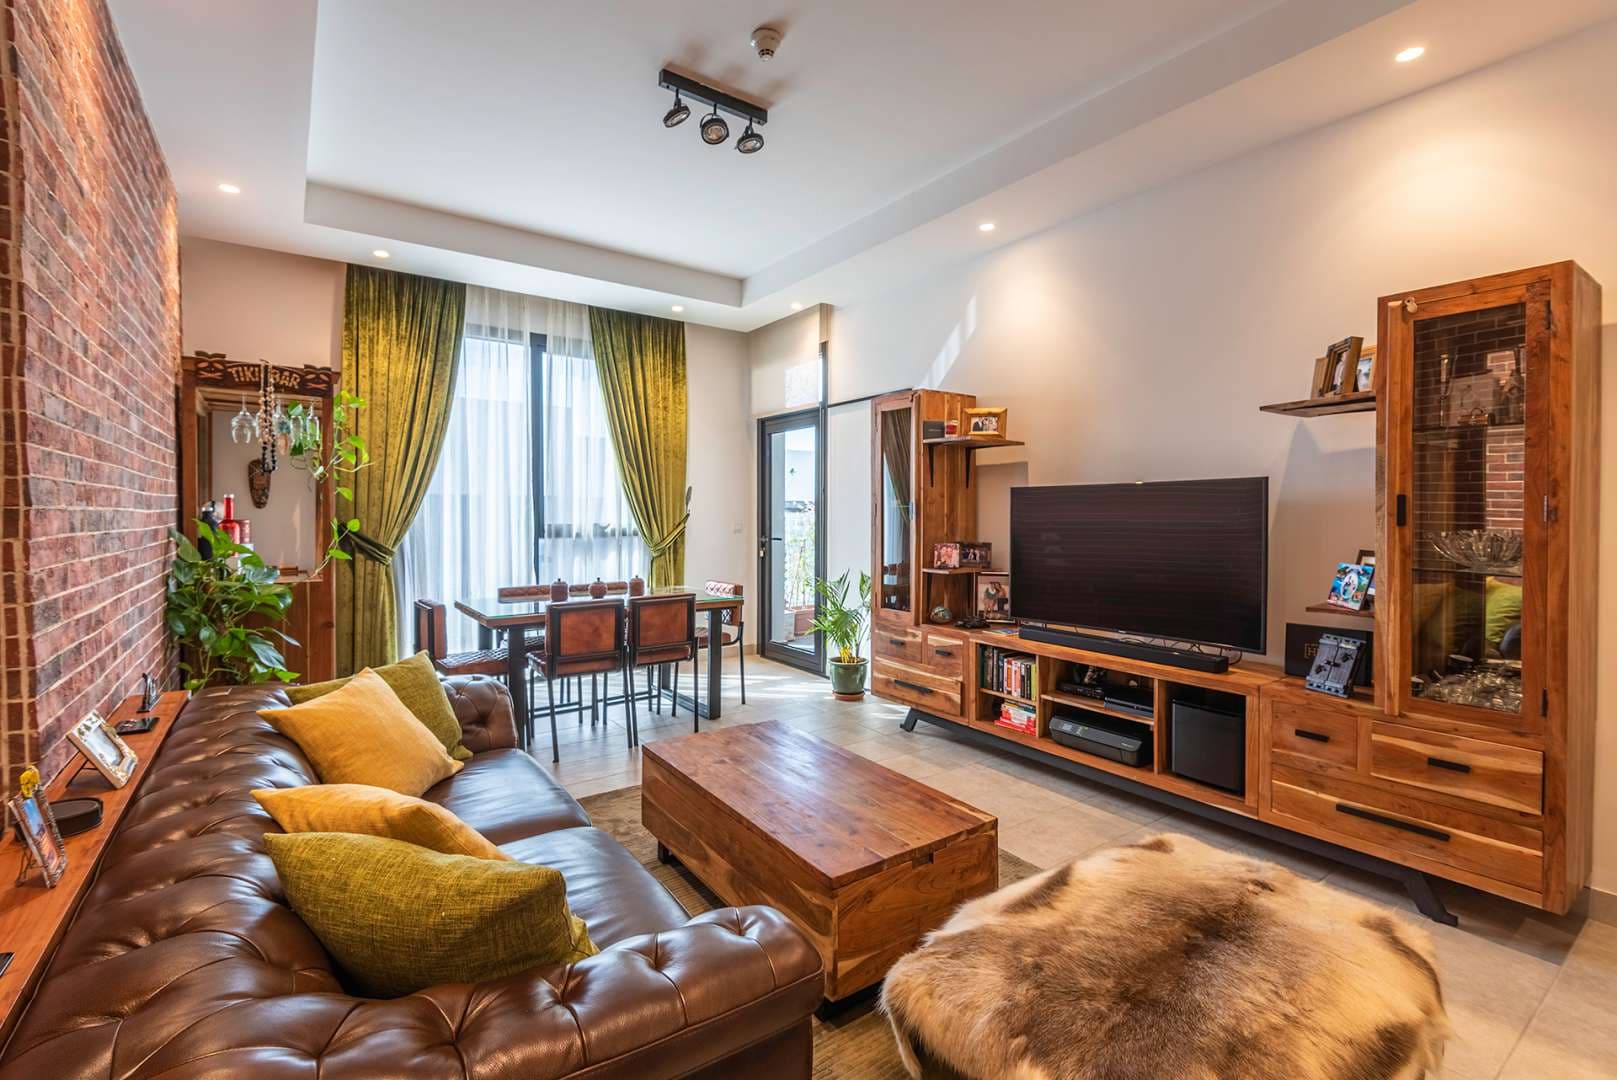 2 Bedroom Apartment For Sale Hyati Residence Lp06205 2f8015daed5ef800.jpg